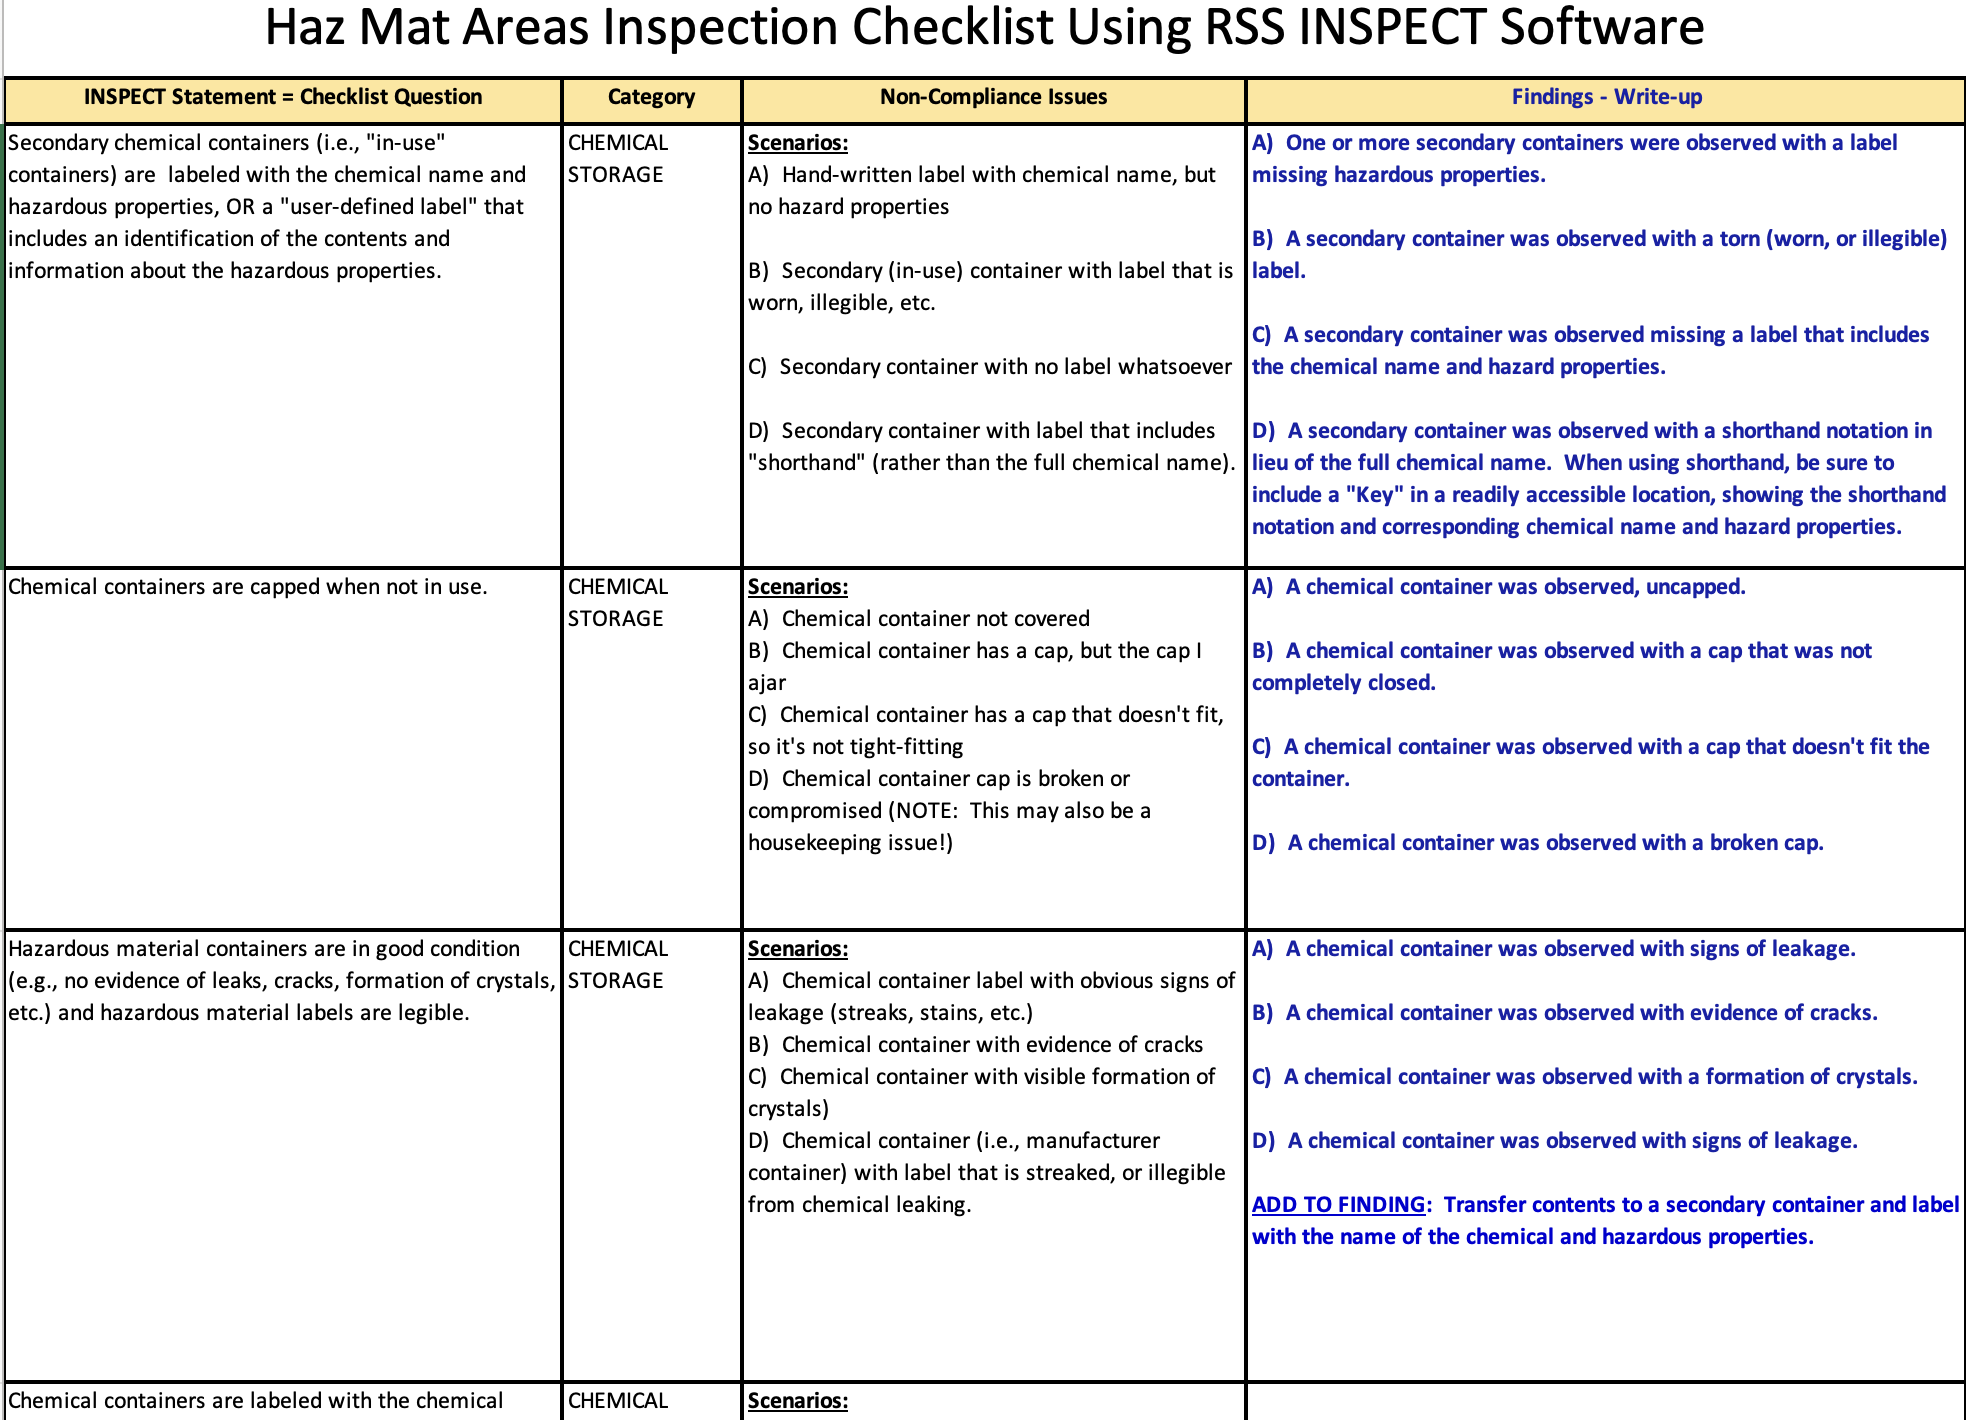 HazMat inspection checklist chemical storage section excerpt